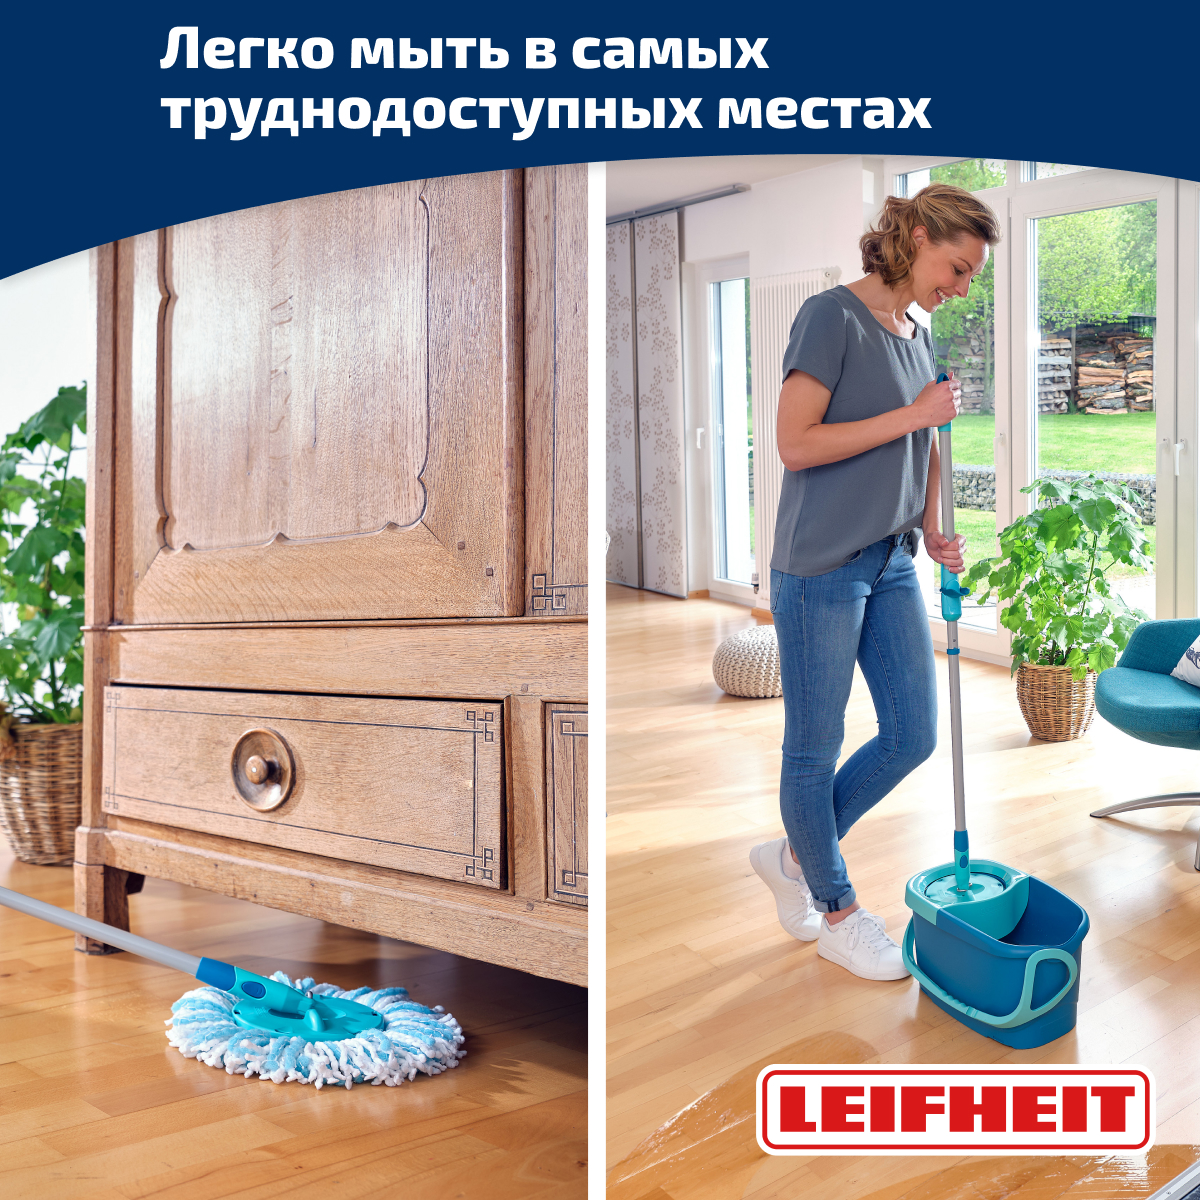 Набор для уборки Leifheit Clean Twist швабра и ведро с отжимом Leifheit 52101, цвет зеленый - фото 4